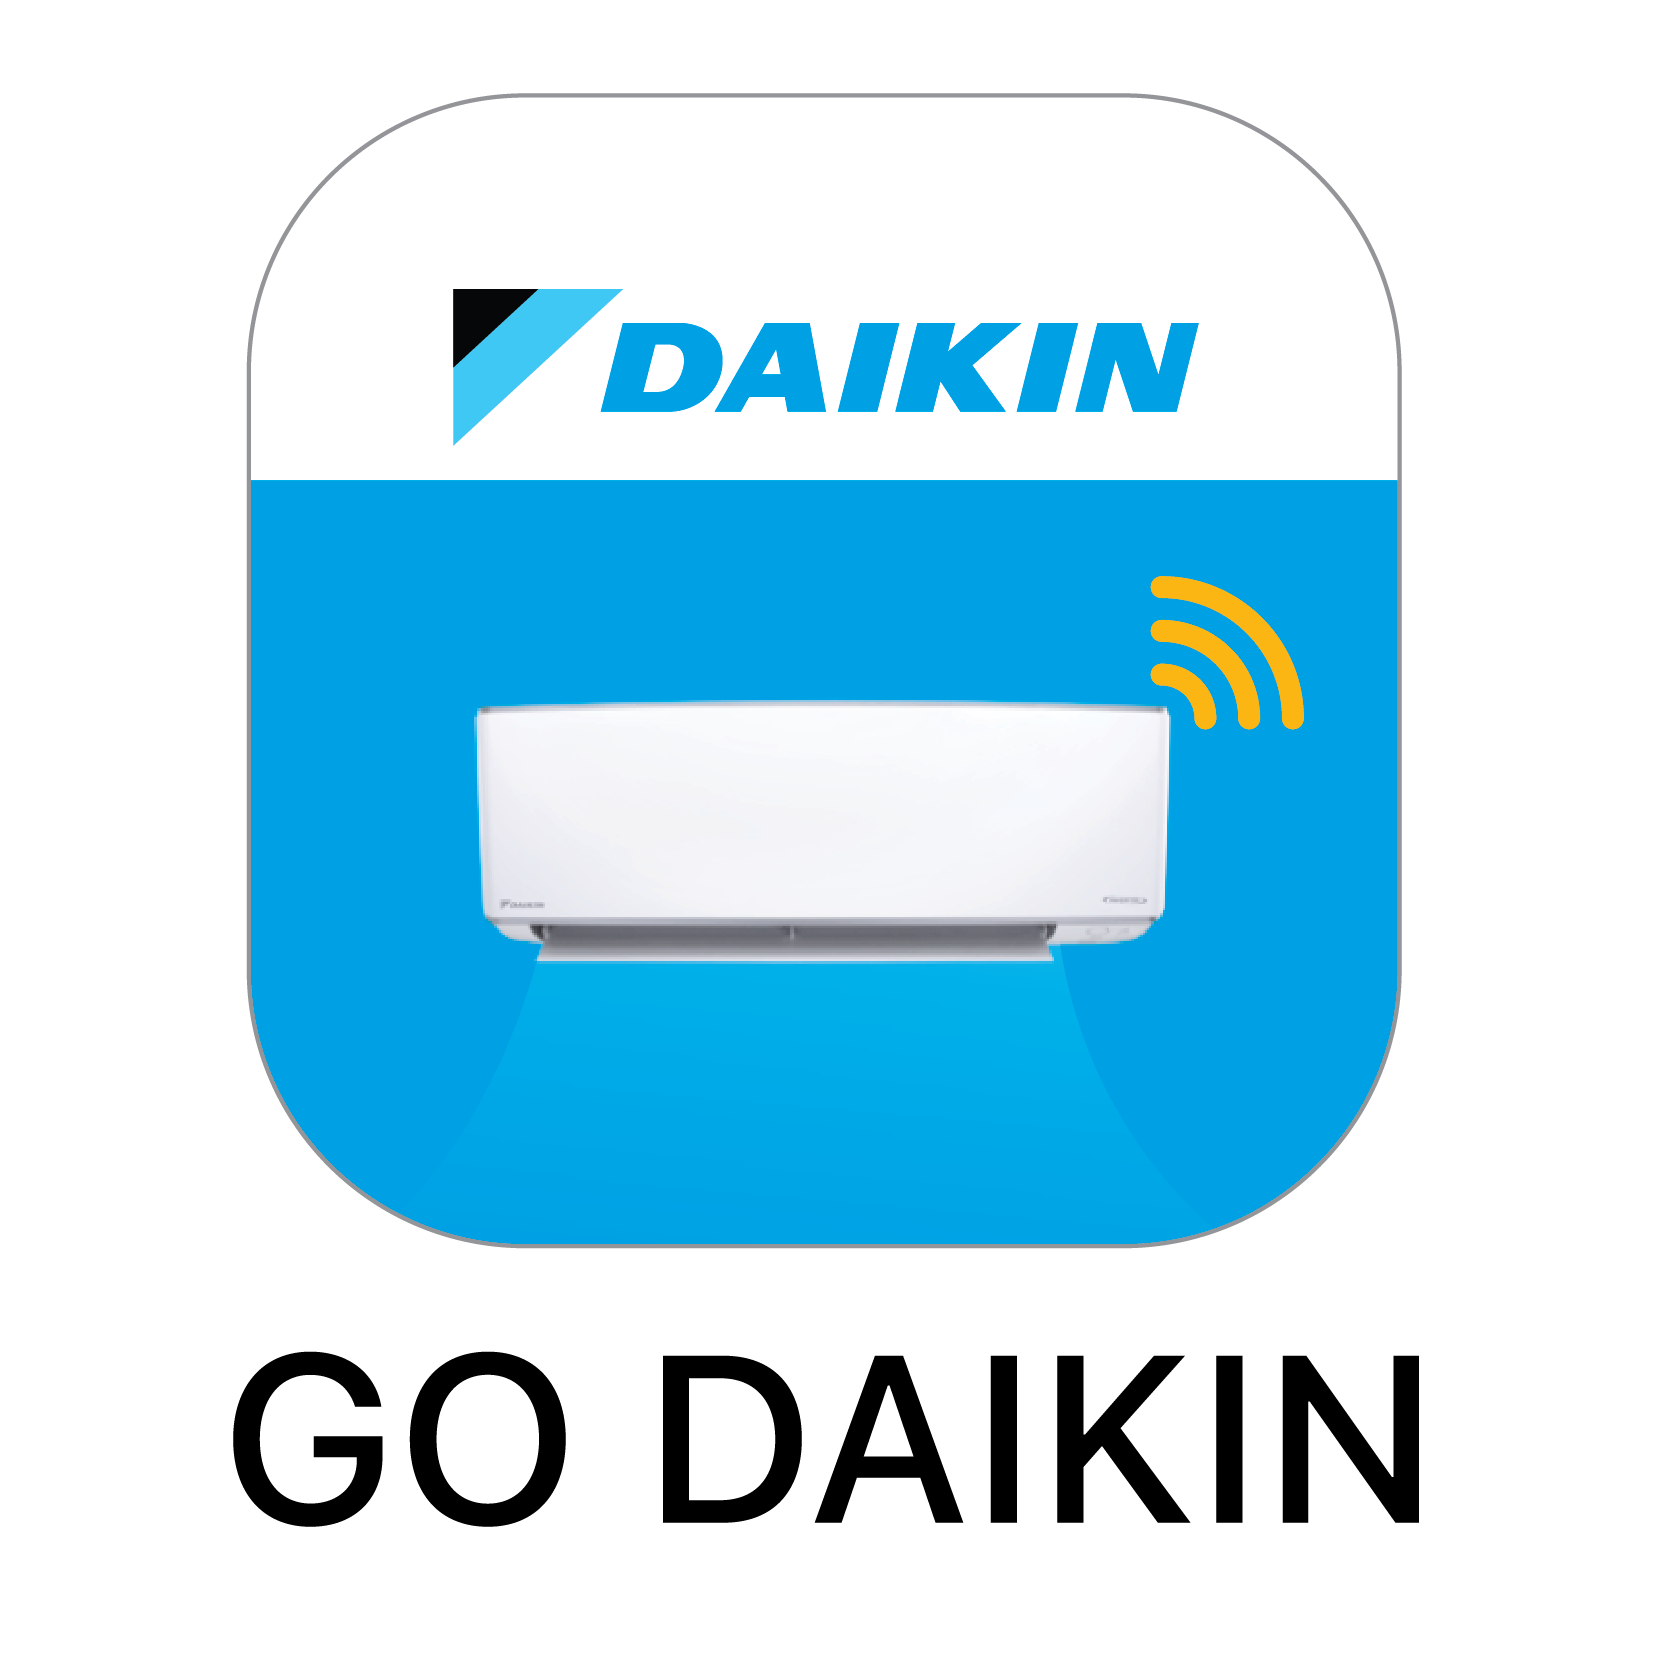 GO DAIKIN App 01 - Tanjak Electrical